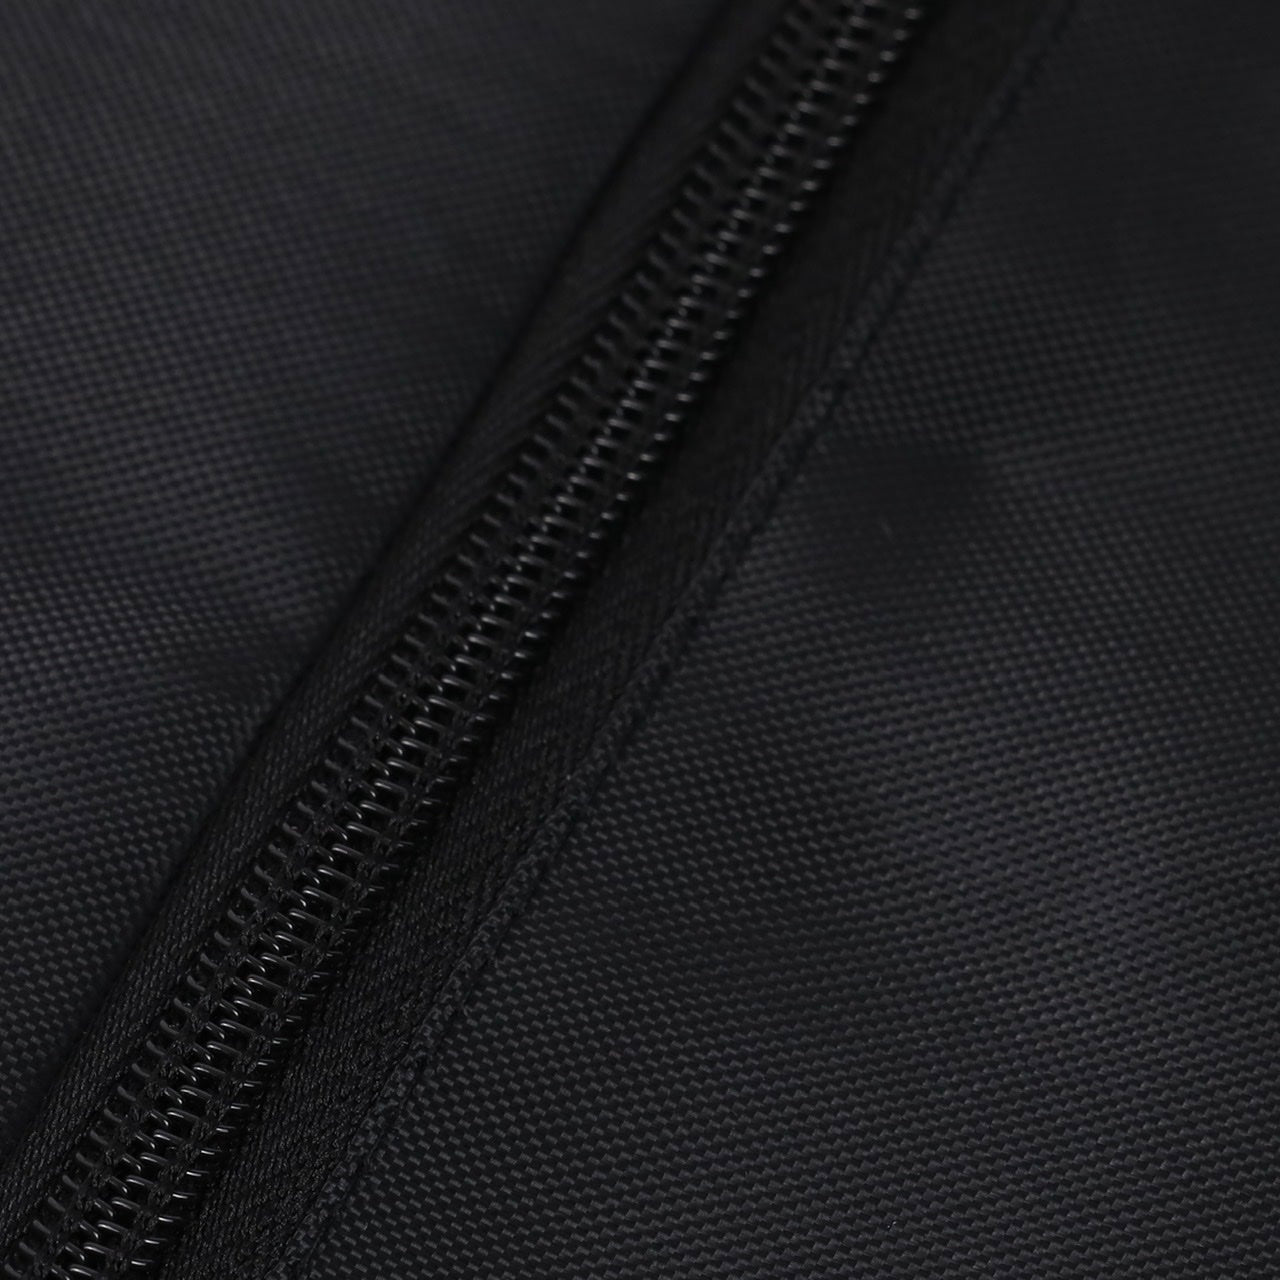 Black Draw String Sackpack Bag